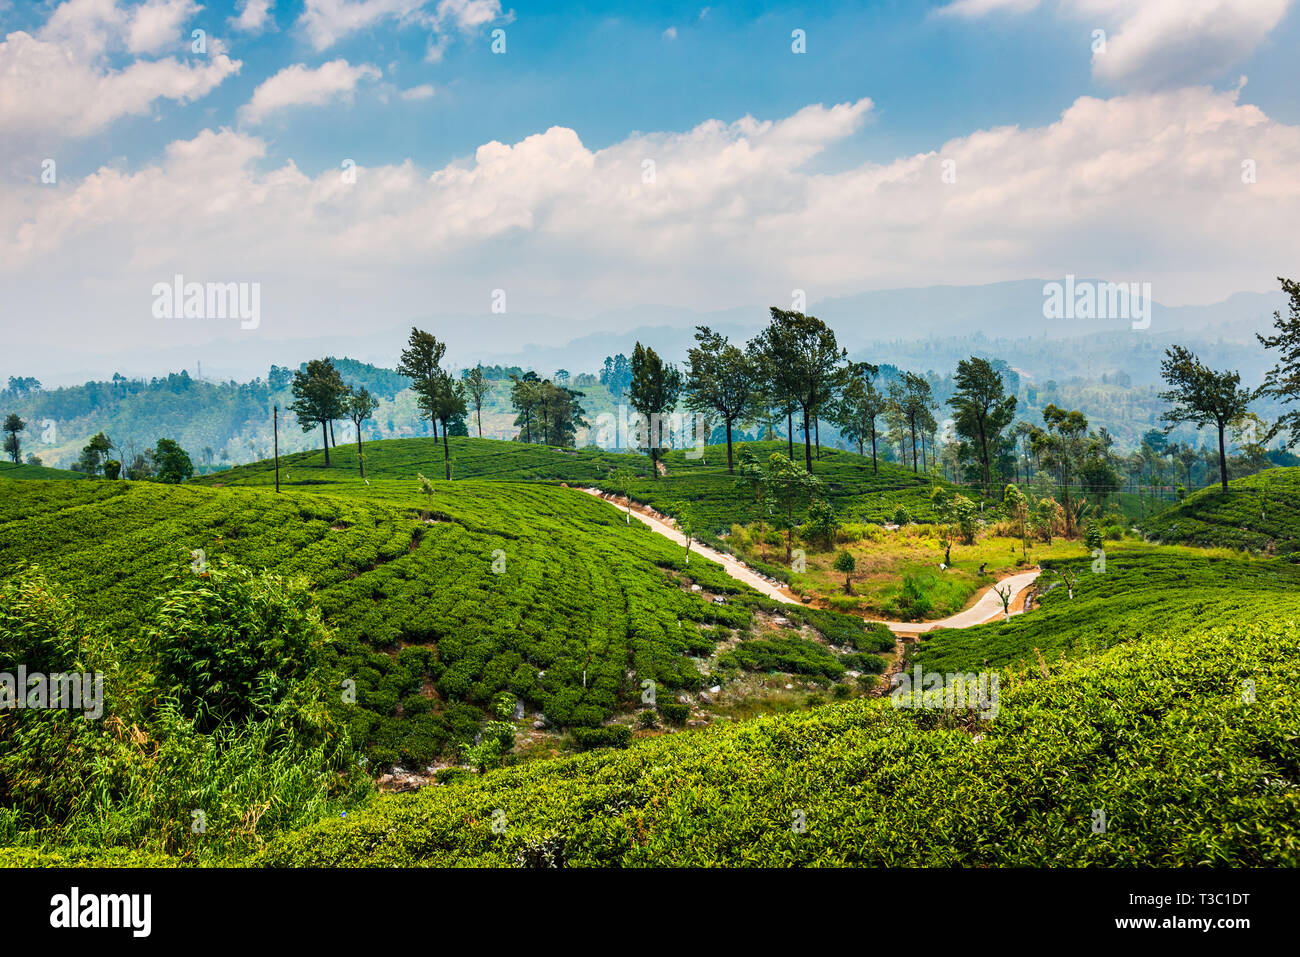 Scenic tea plantation landscape in Sri Lanka highlands Stock Photo